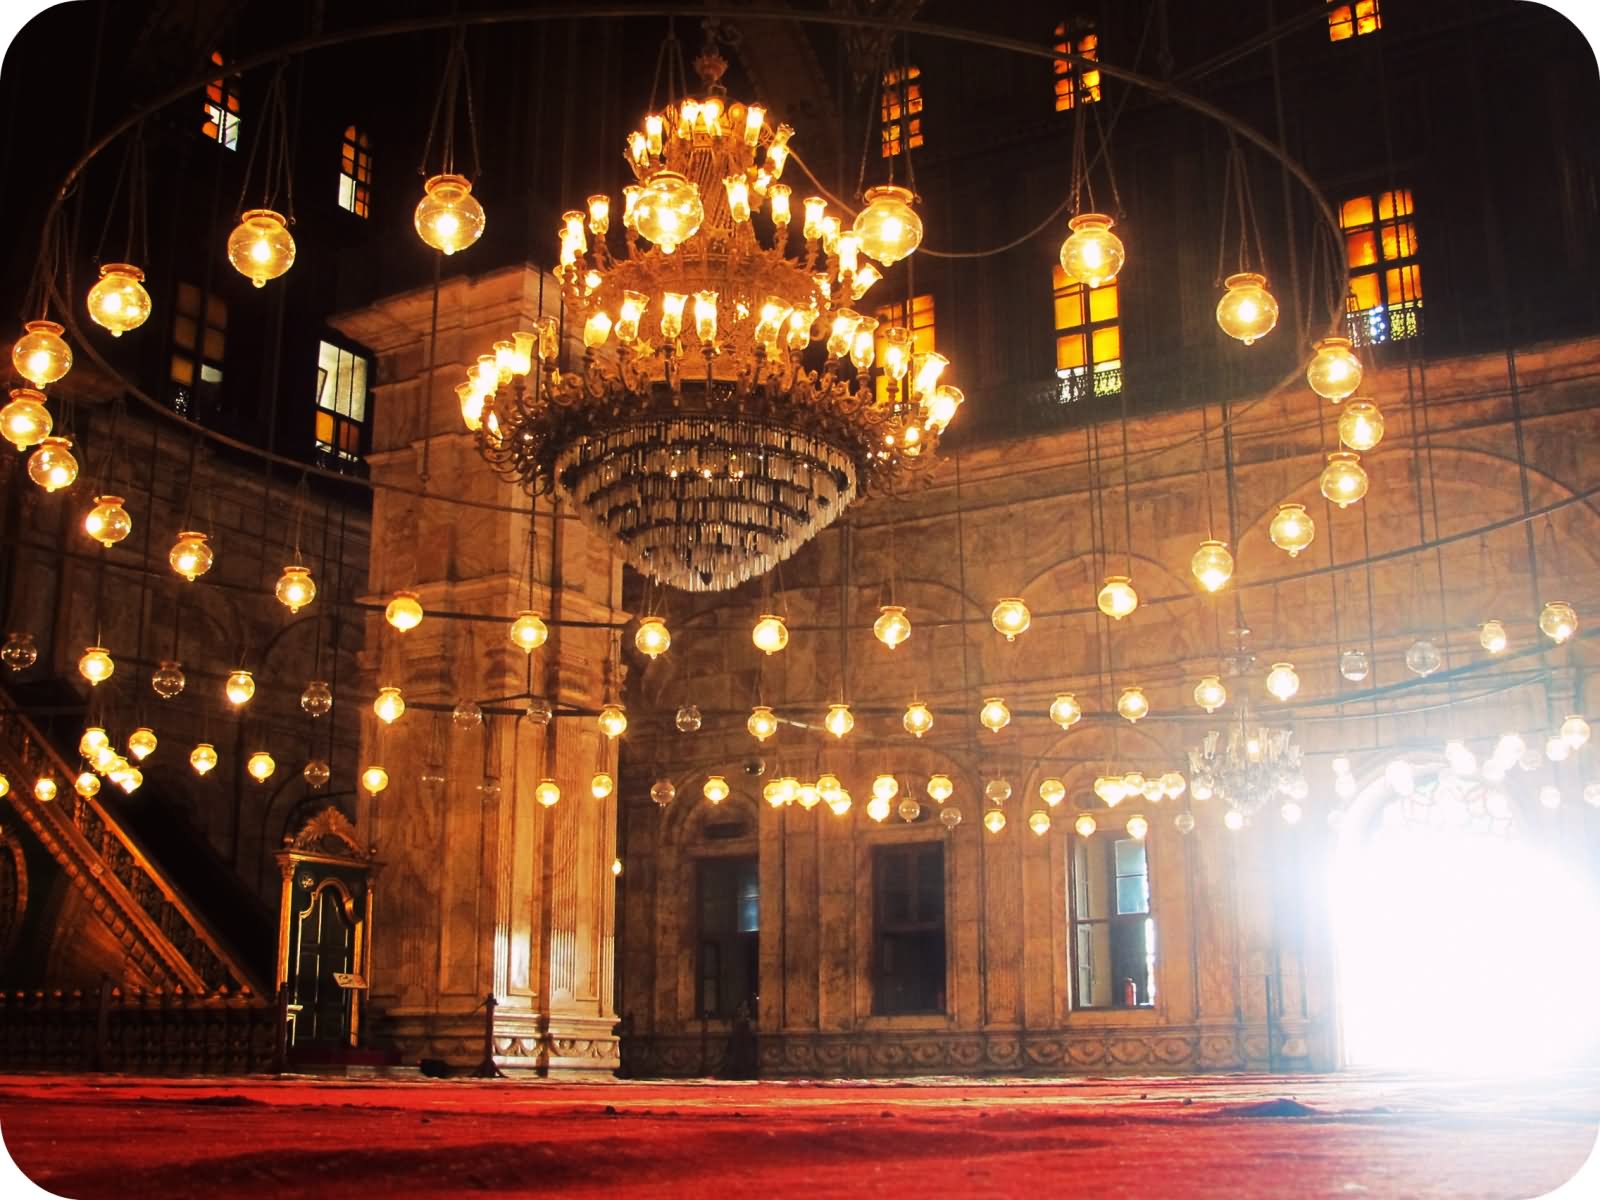 Lighting Chandelier Inside The Mosque Of Muhammad Ali, Egypt